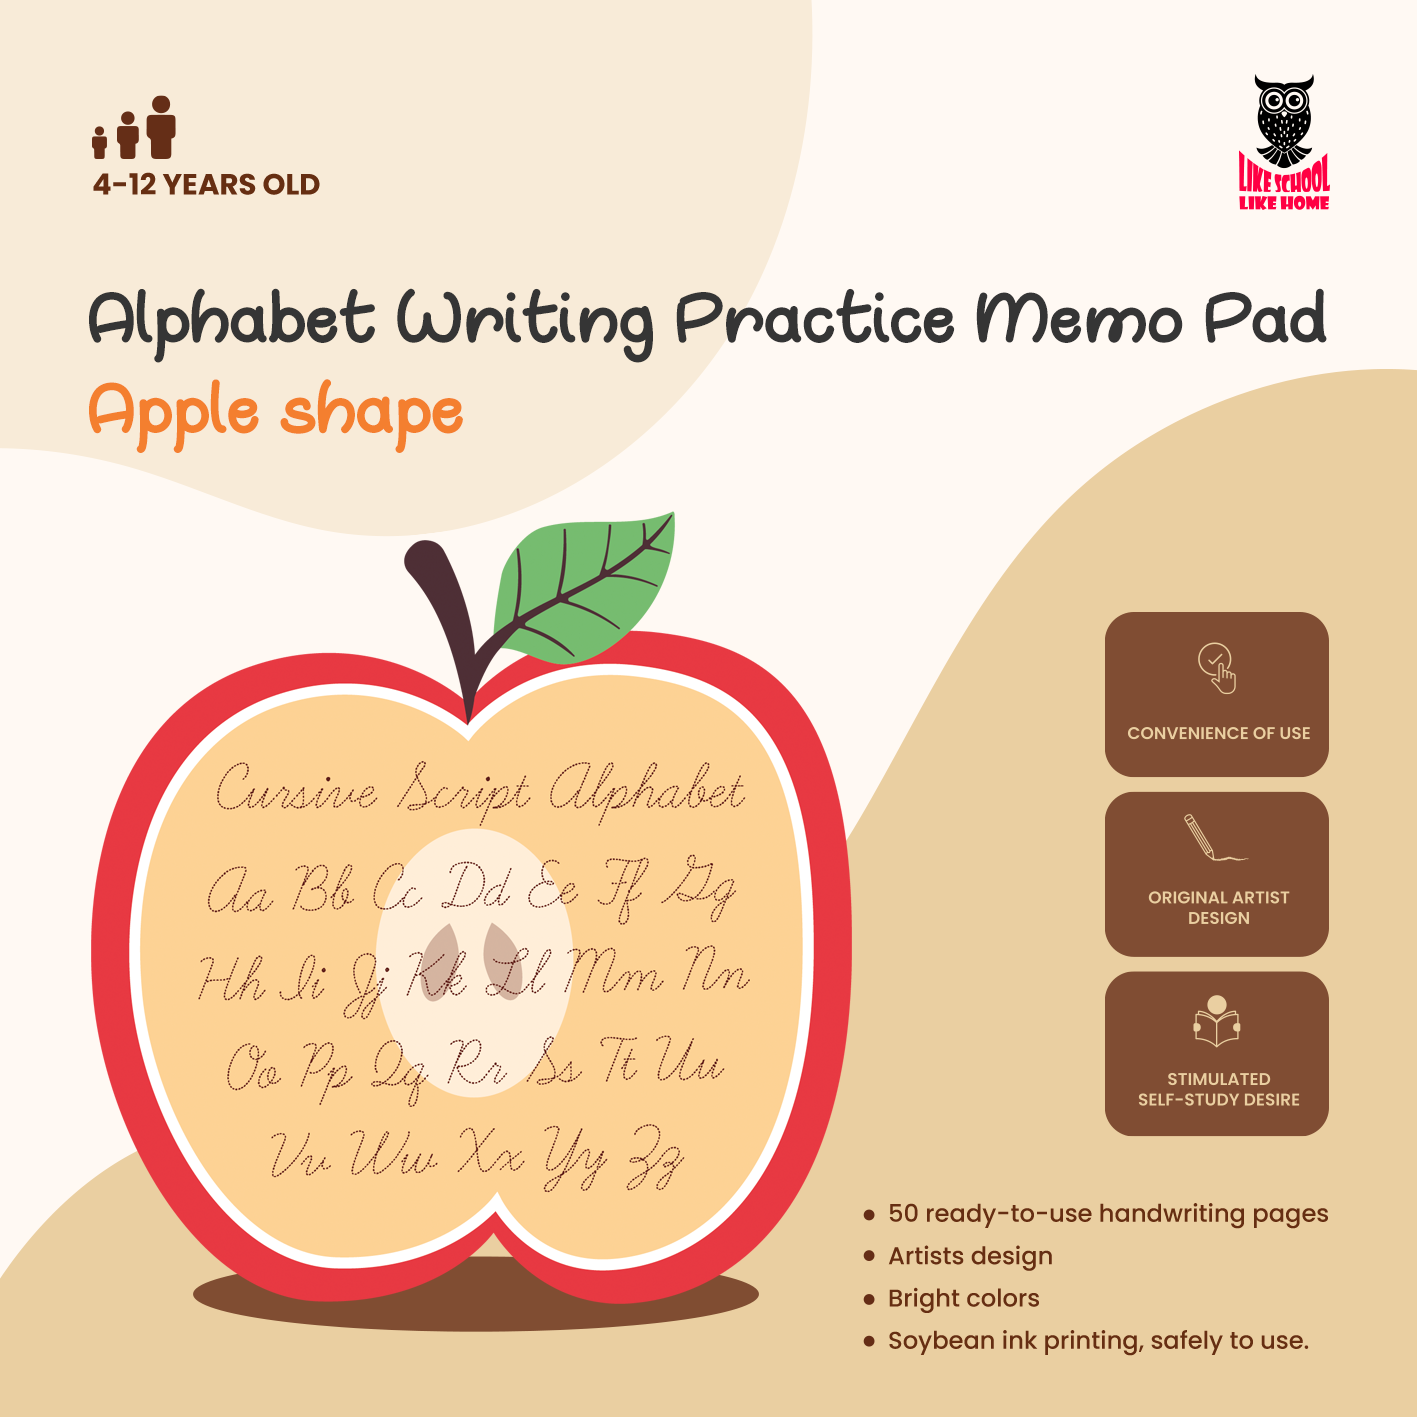 Cursive script alphabet apple shaped Practice memo pad